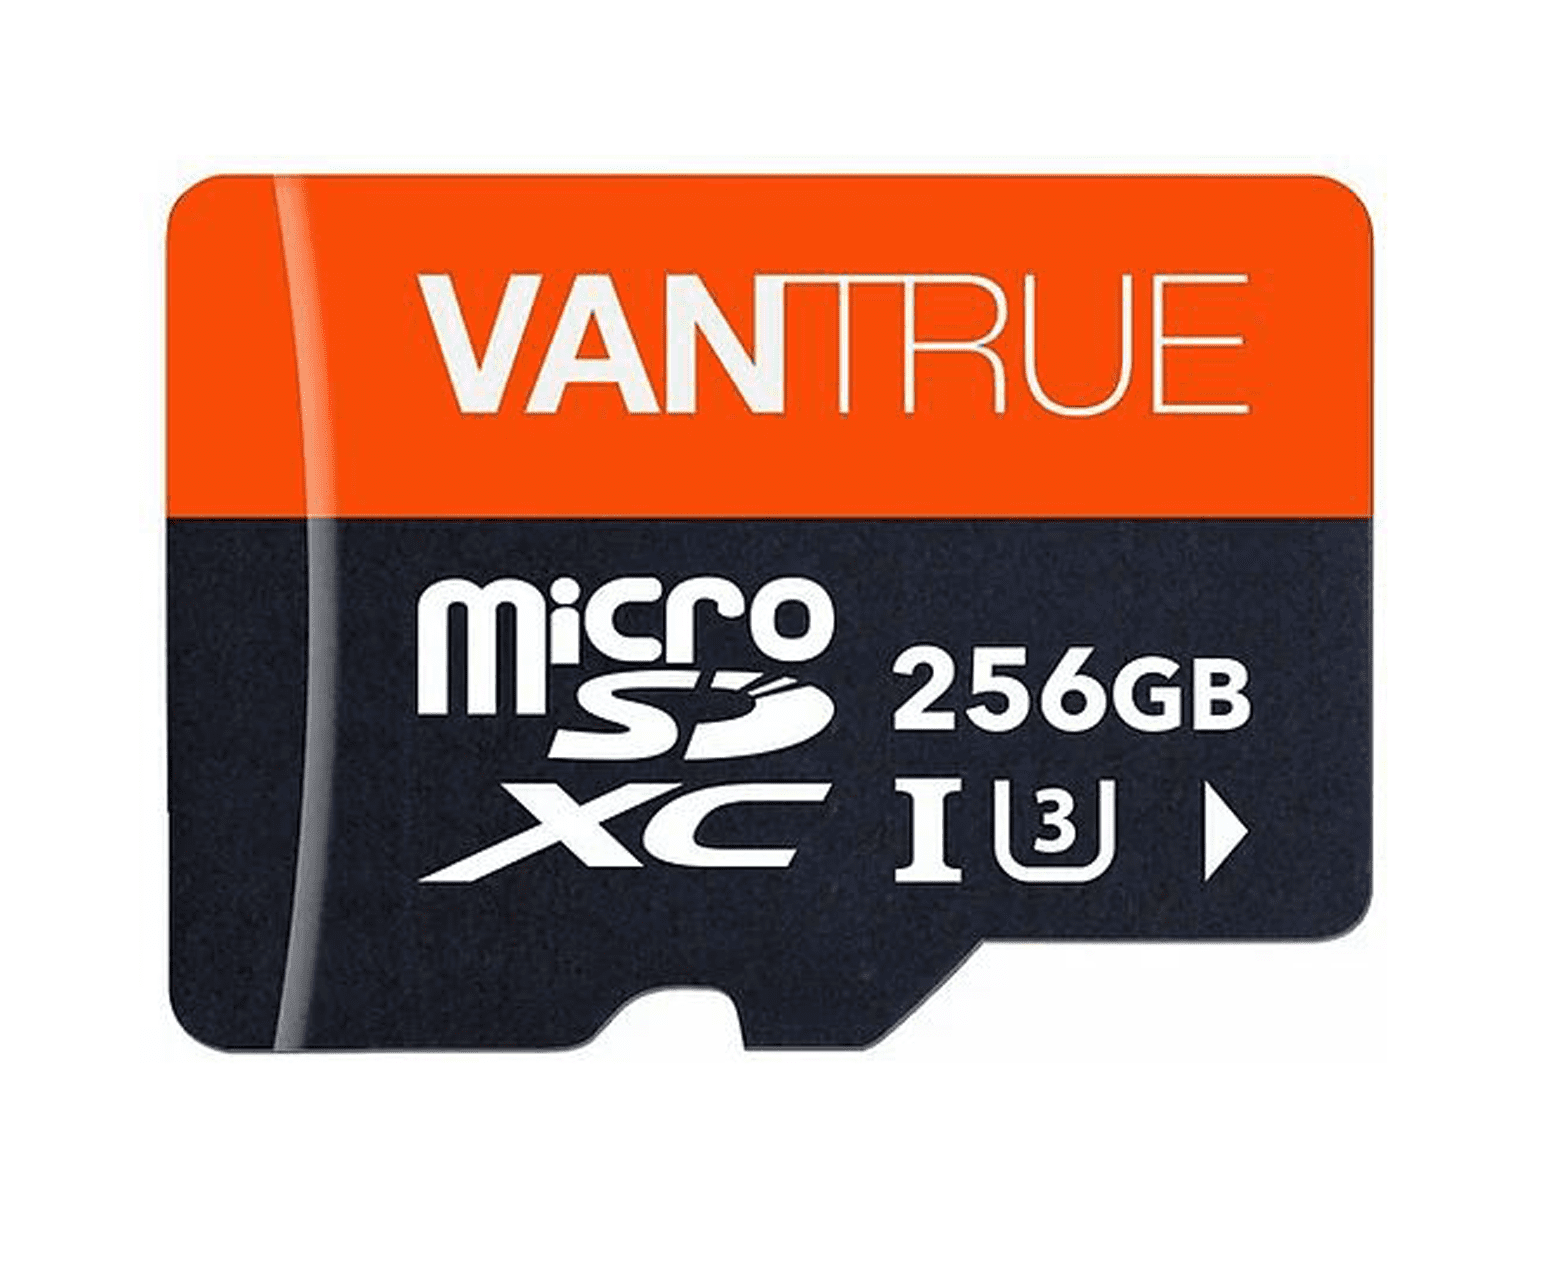 Vantrue 256GB SD card